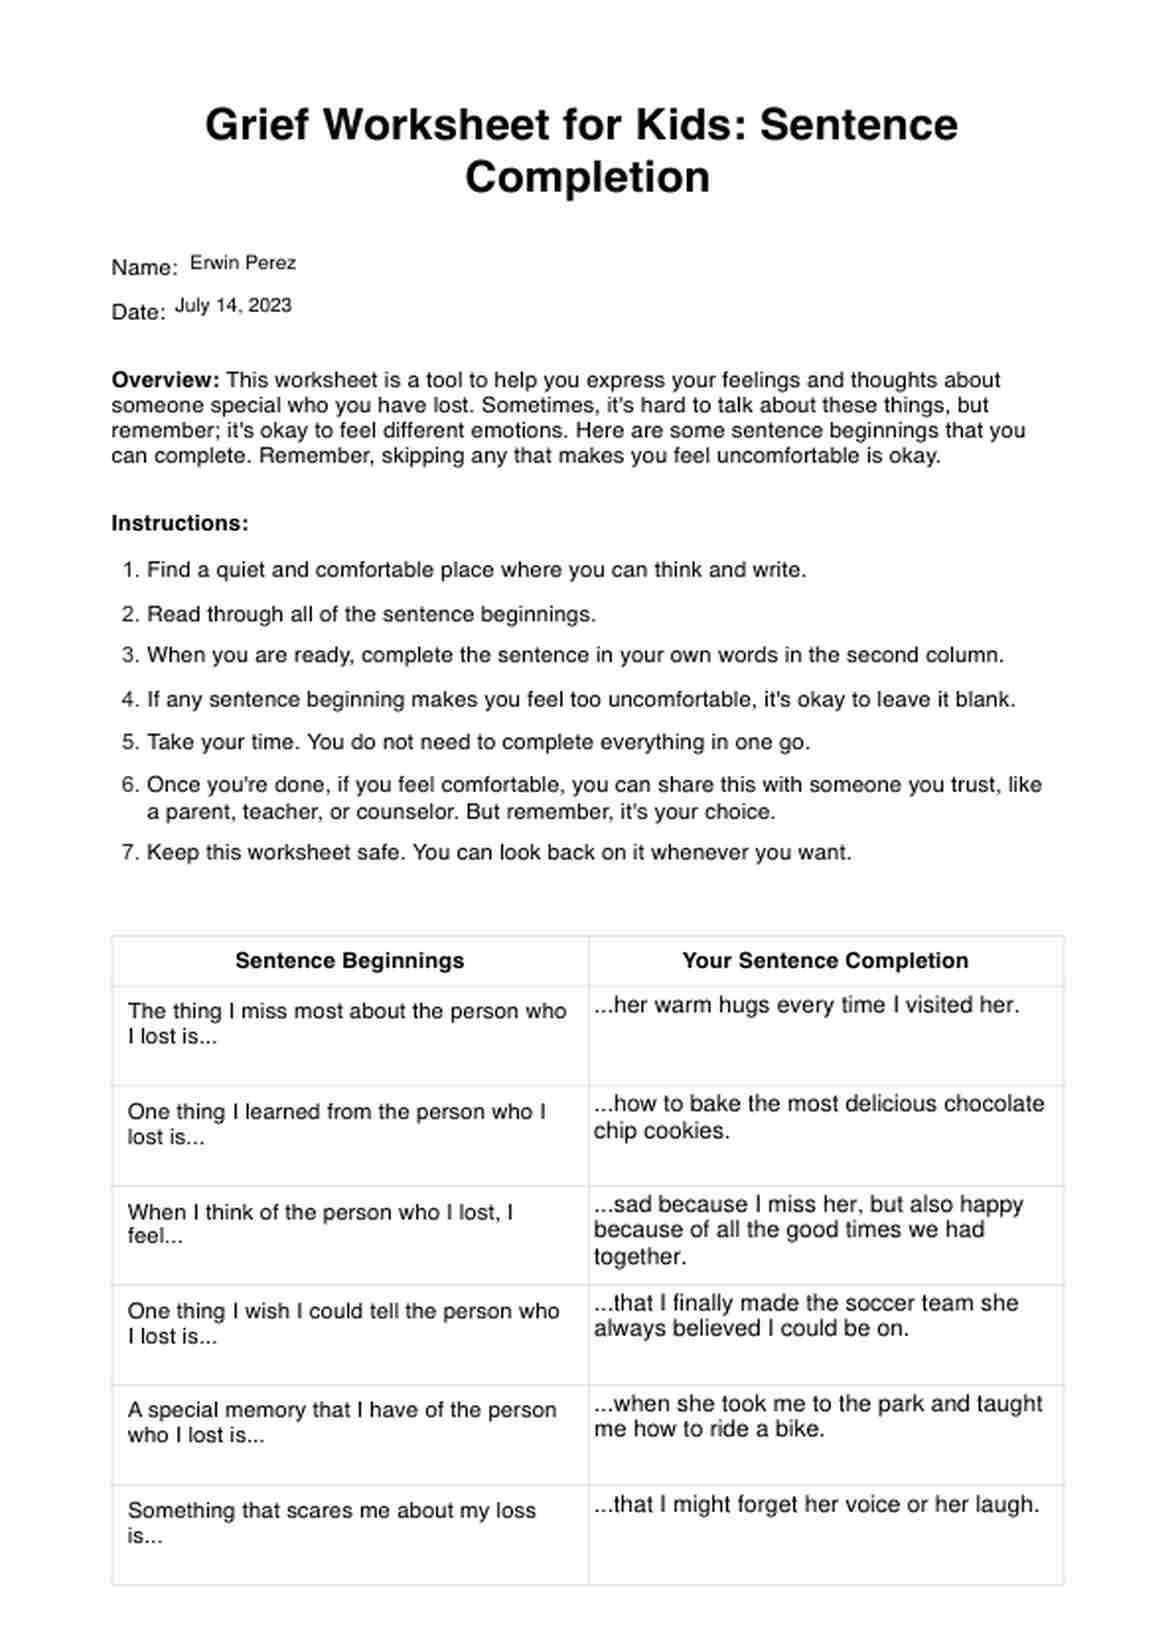 Grief Worksheet for Kids PDF Example